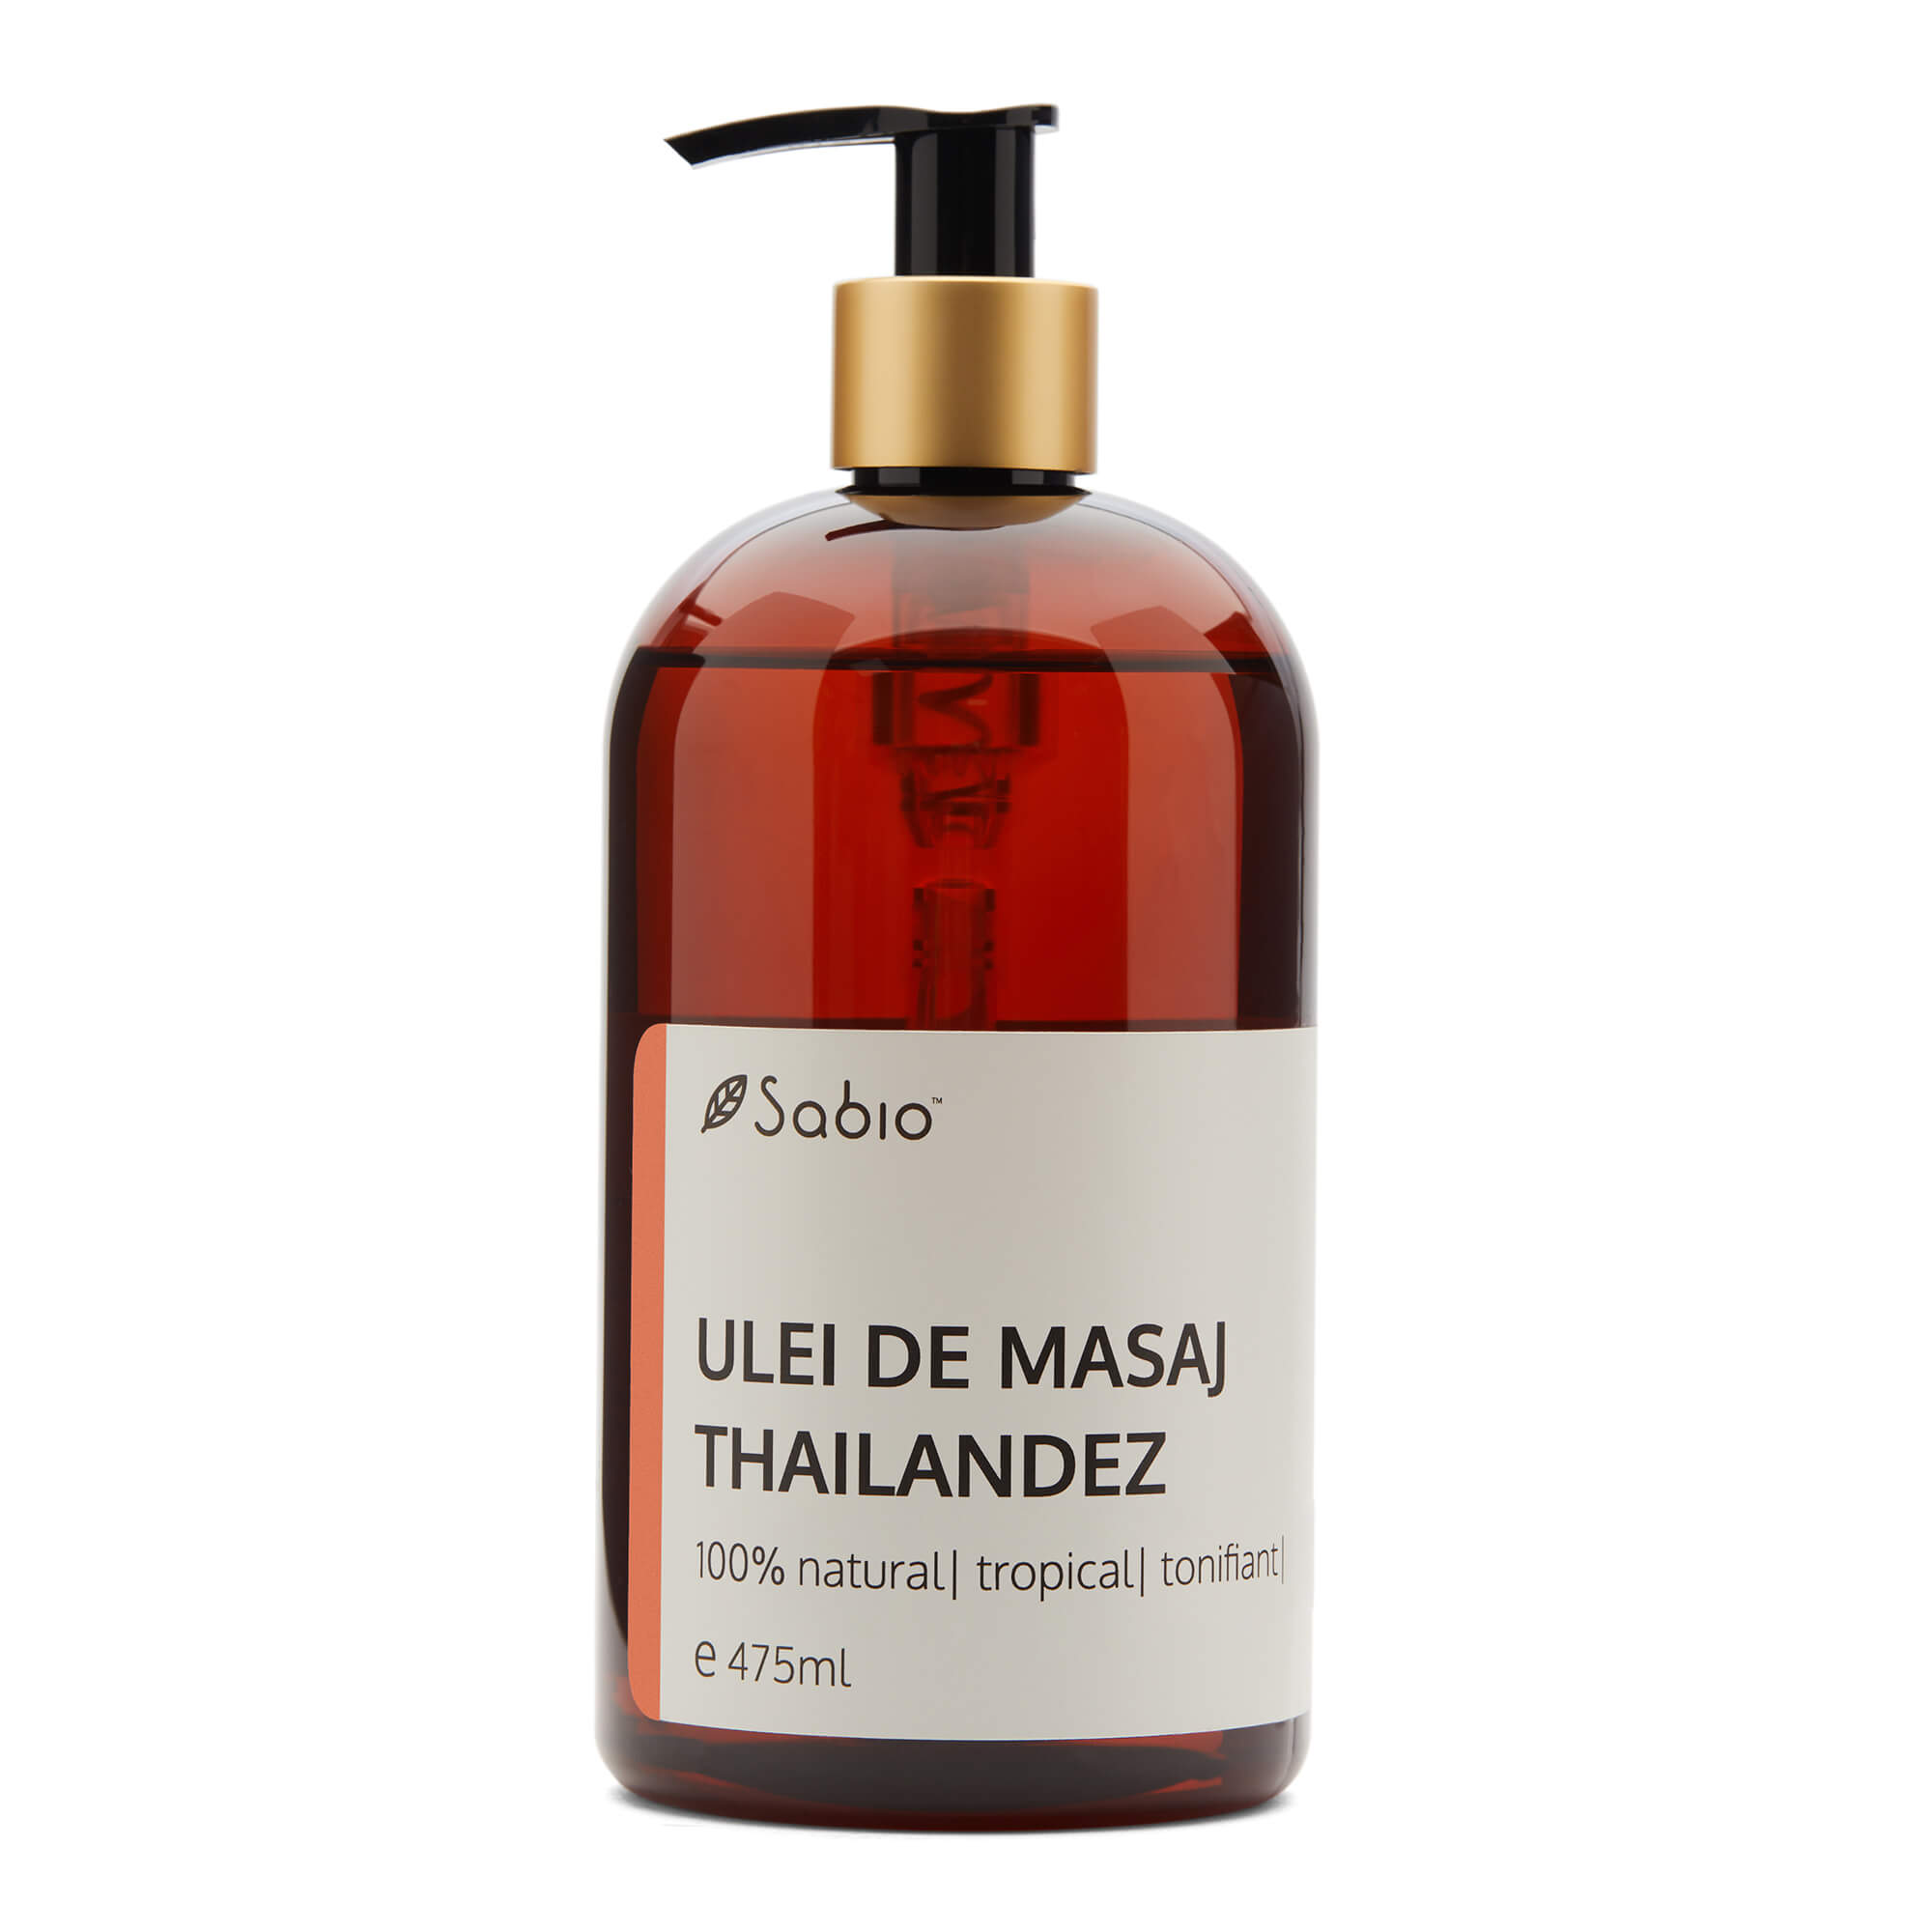 Thai massage oil